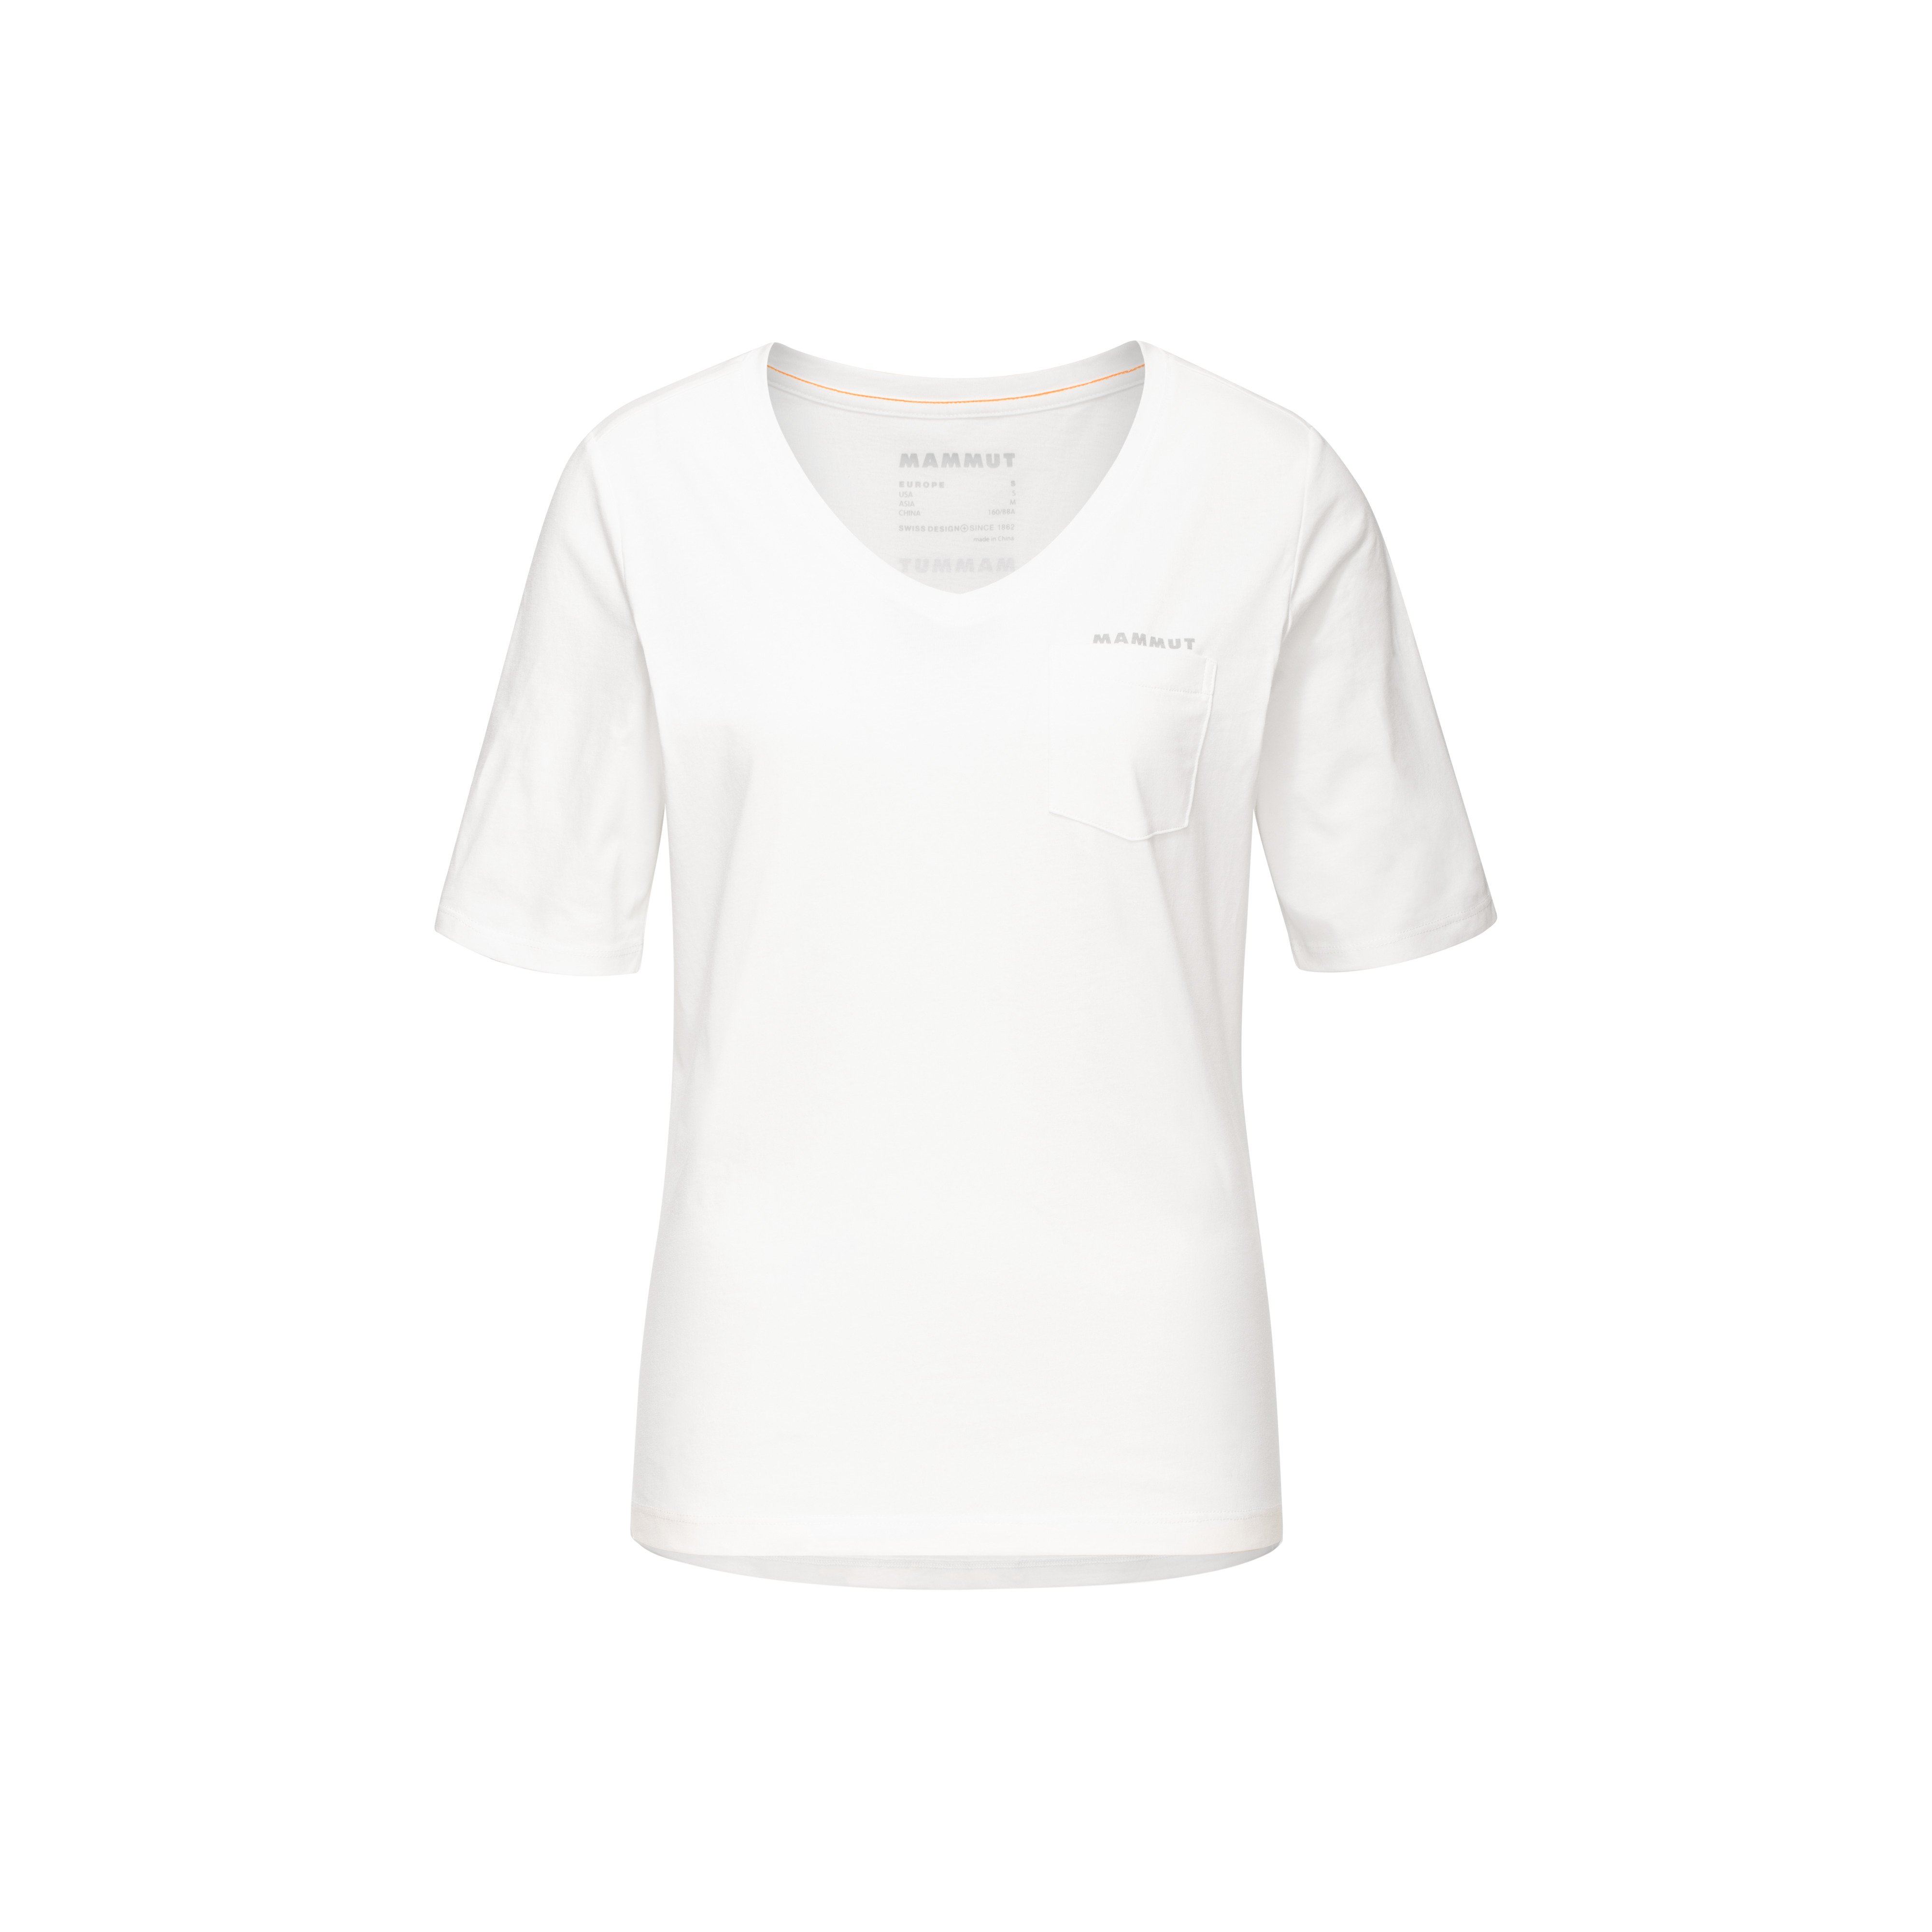 Mammut Pocket T-Shirt Women - white, XS thumbnail